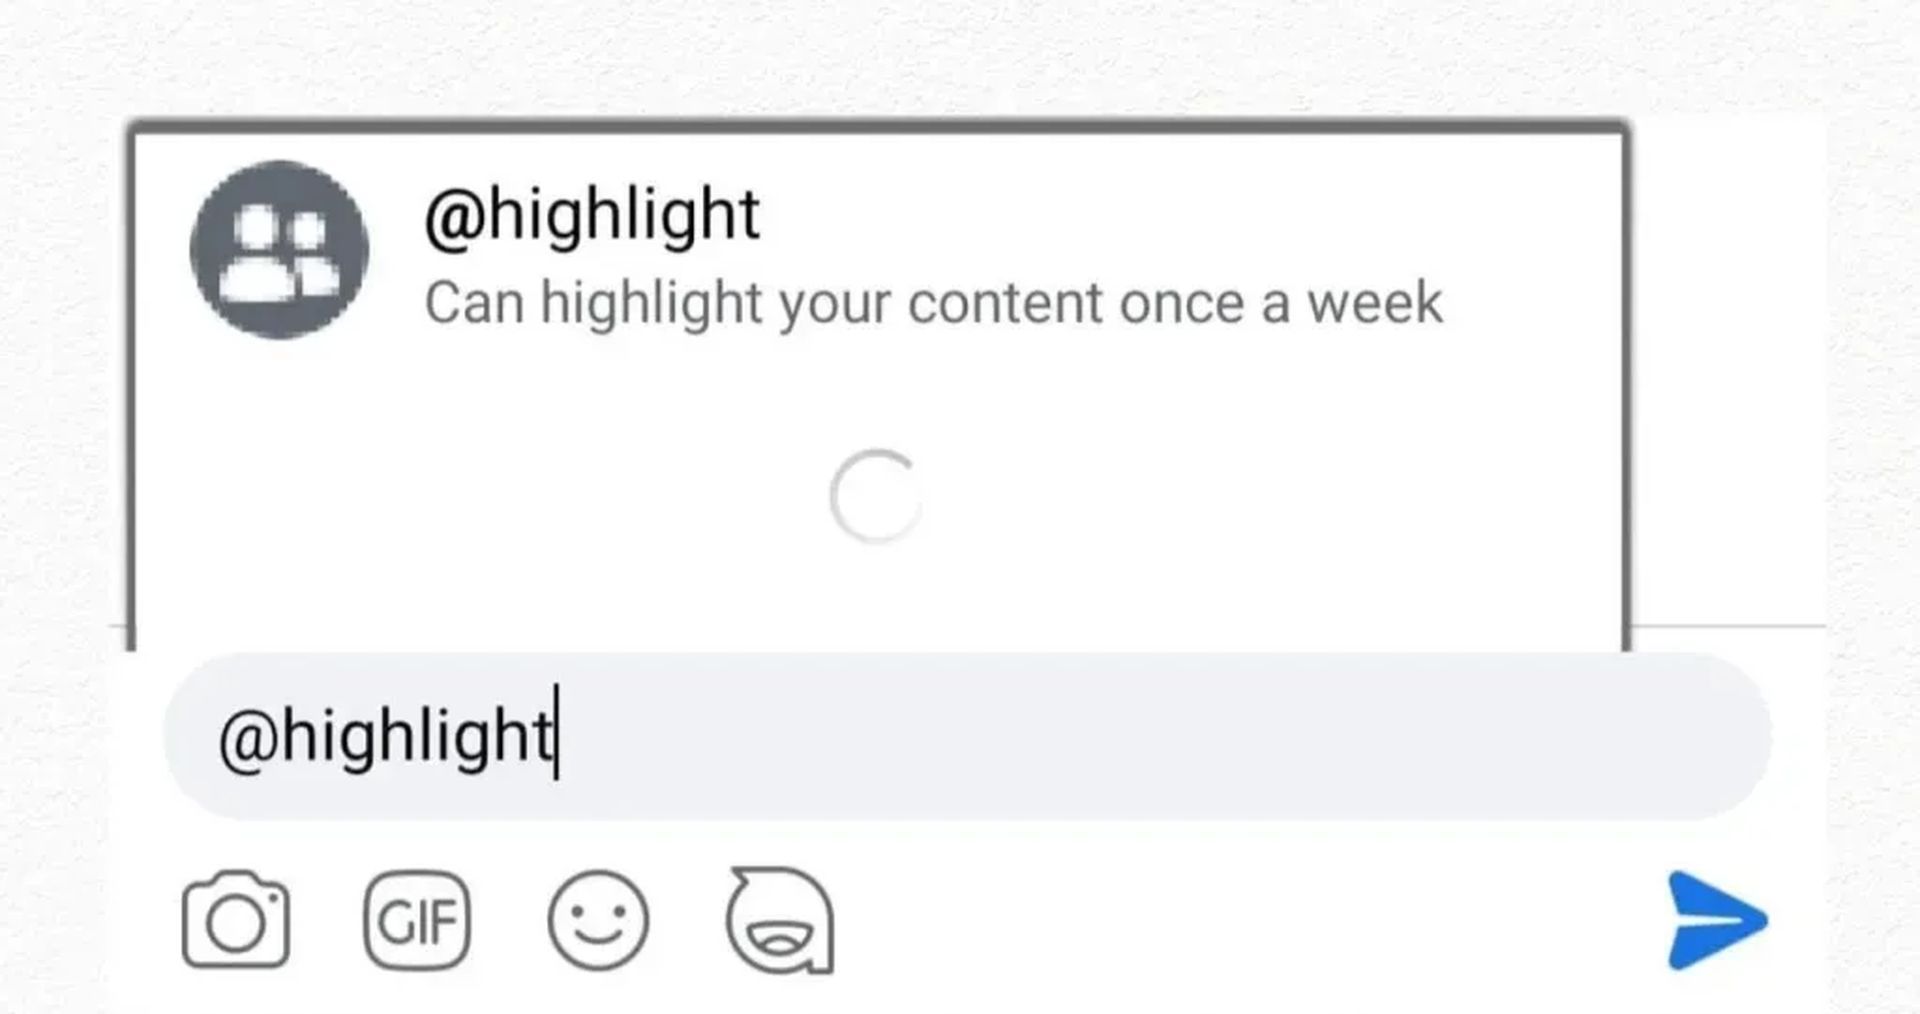 @highlight Facebook